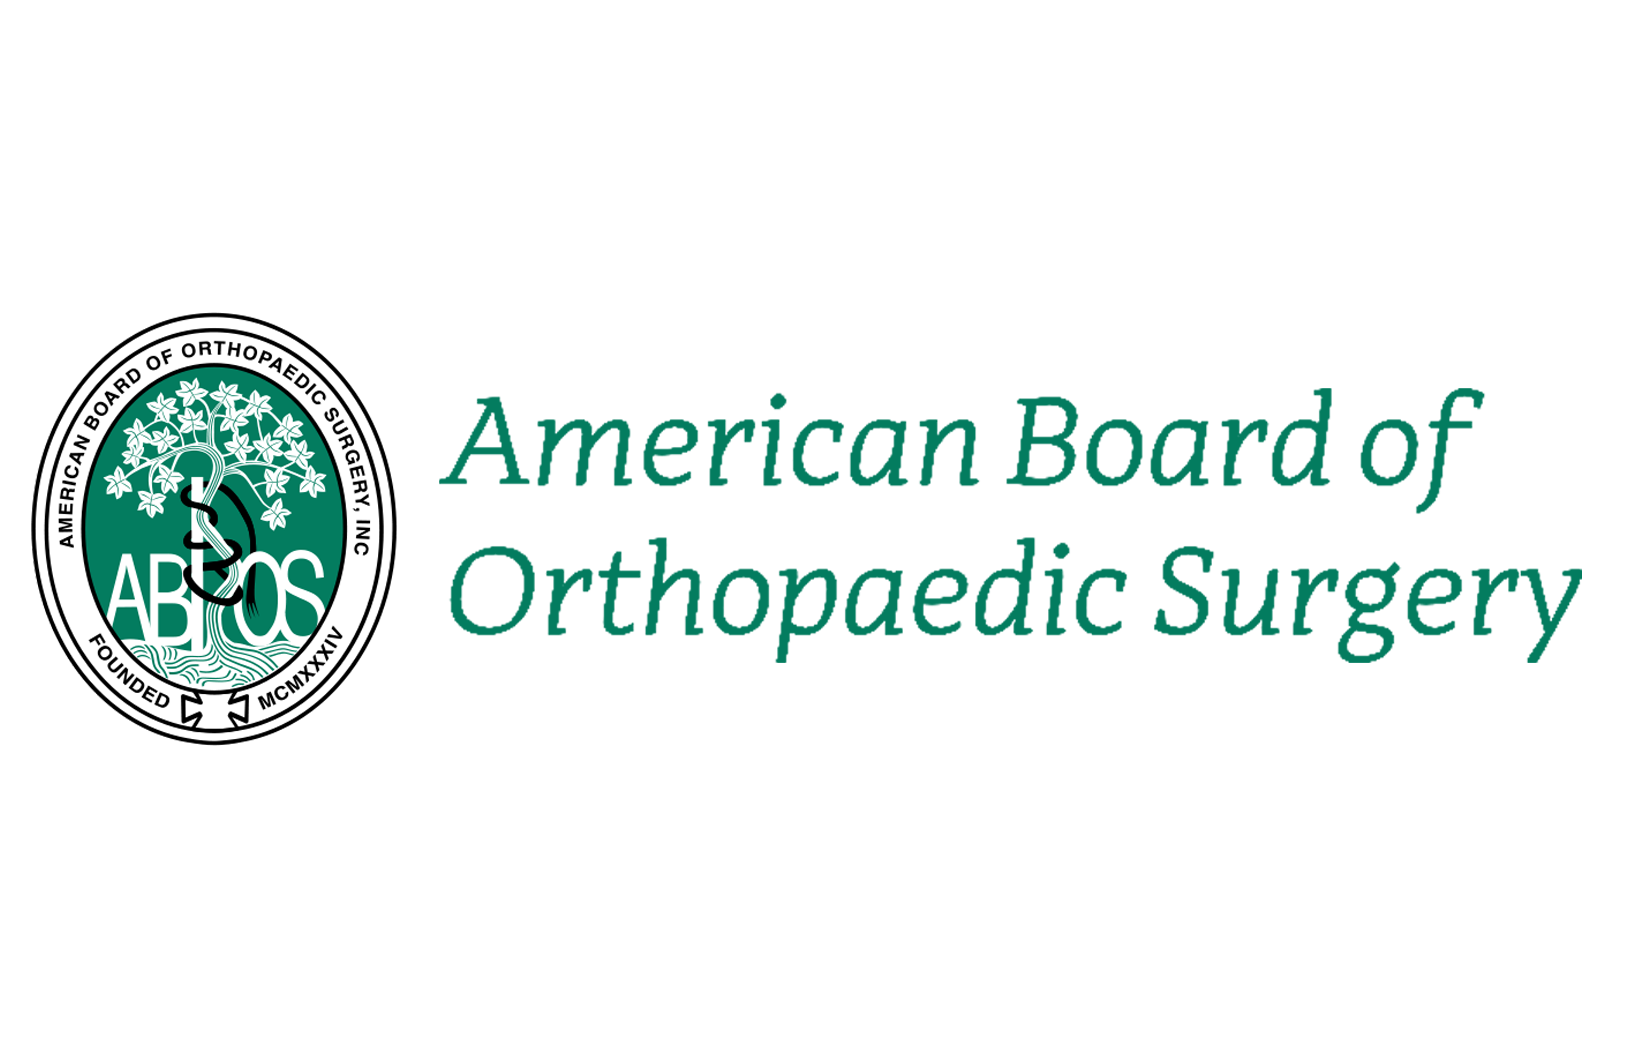 American Board of Orthopaedic Surgery